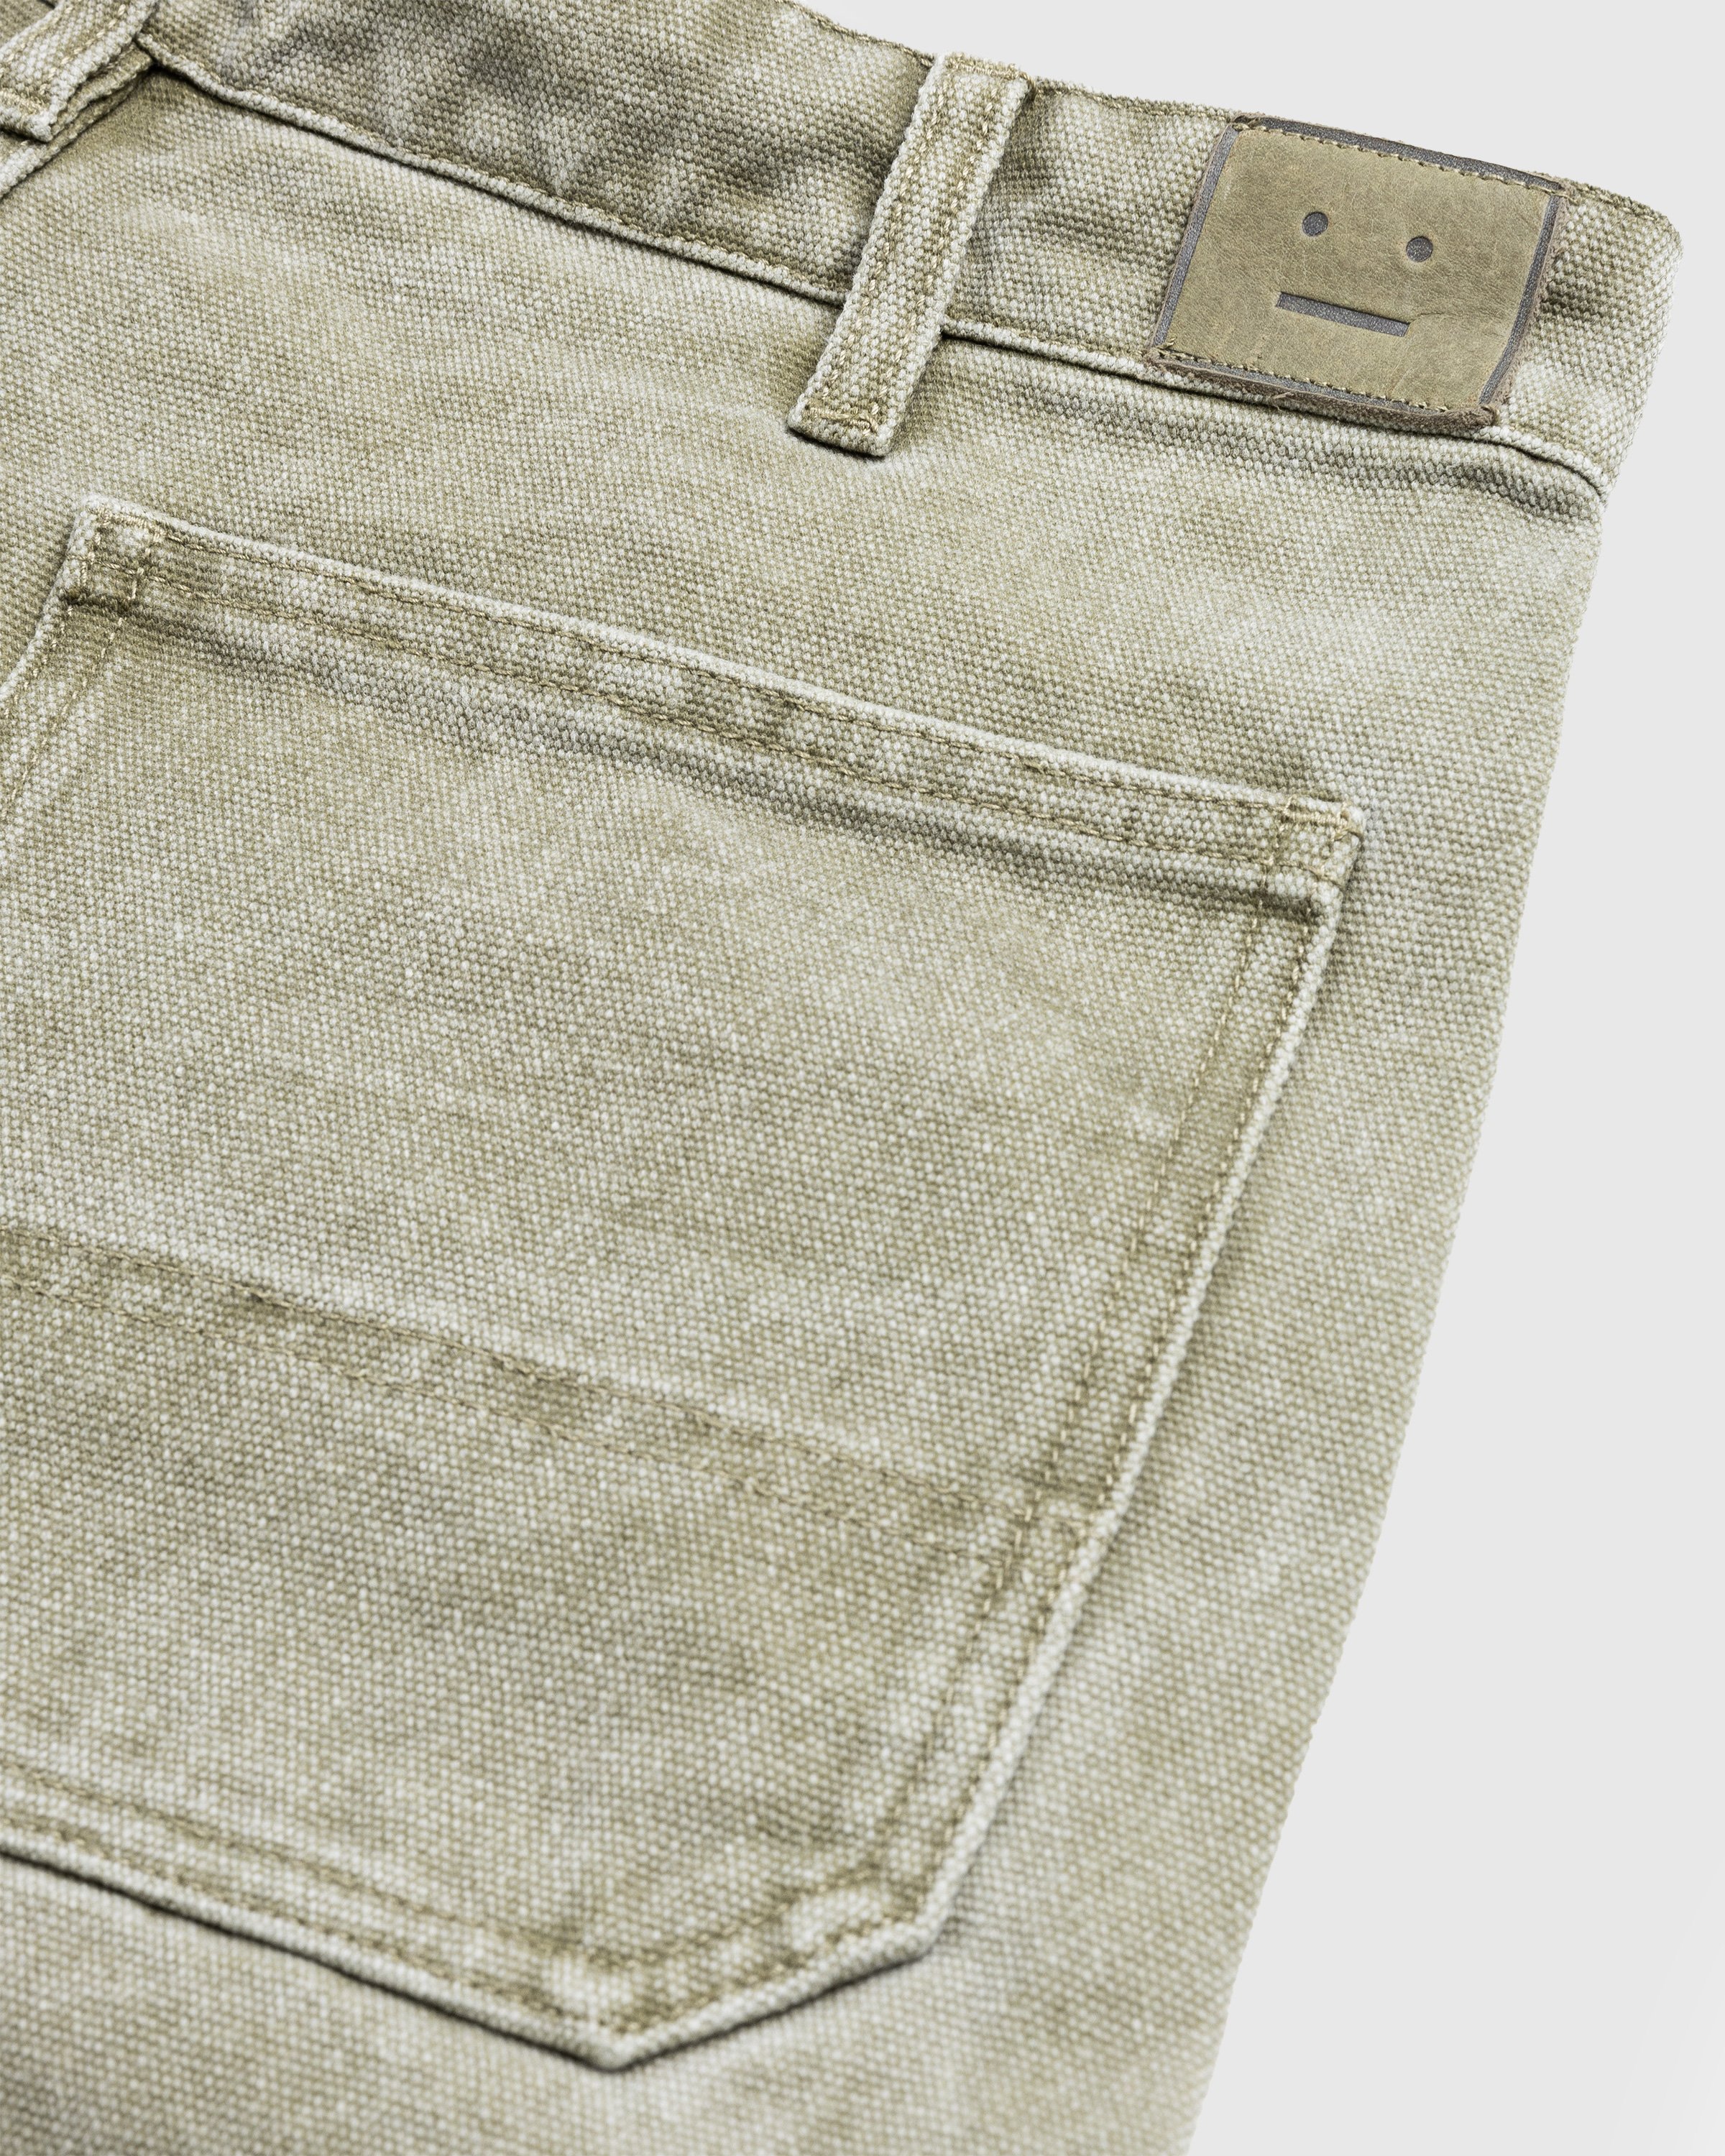 Acne Studios - Cotton Canvas Trousers Khaki Beige - Clothing - Green - Image 6